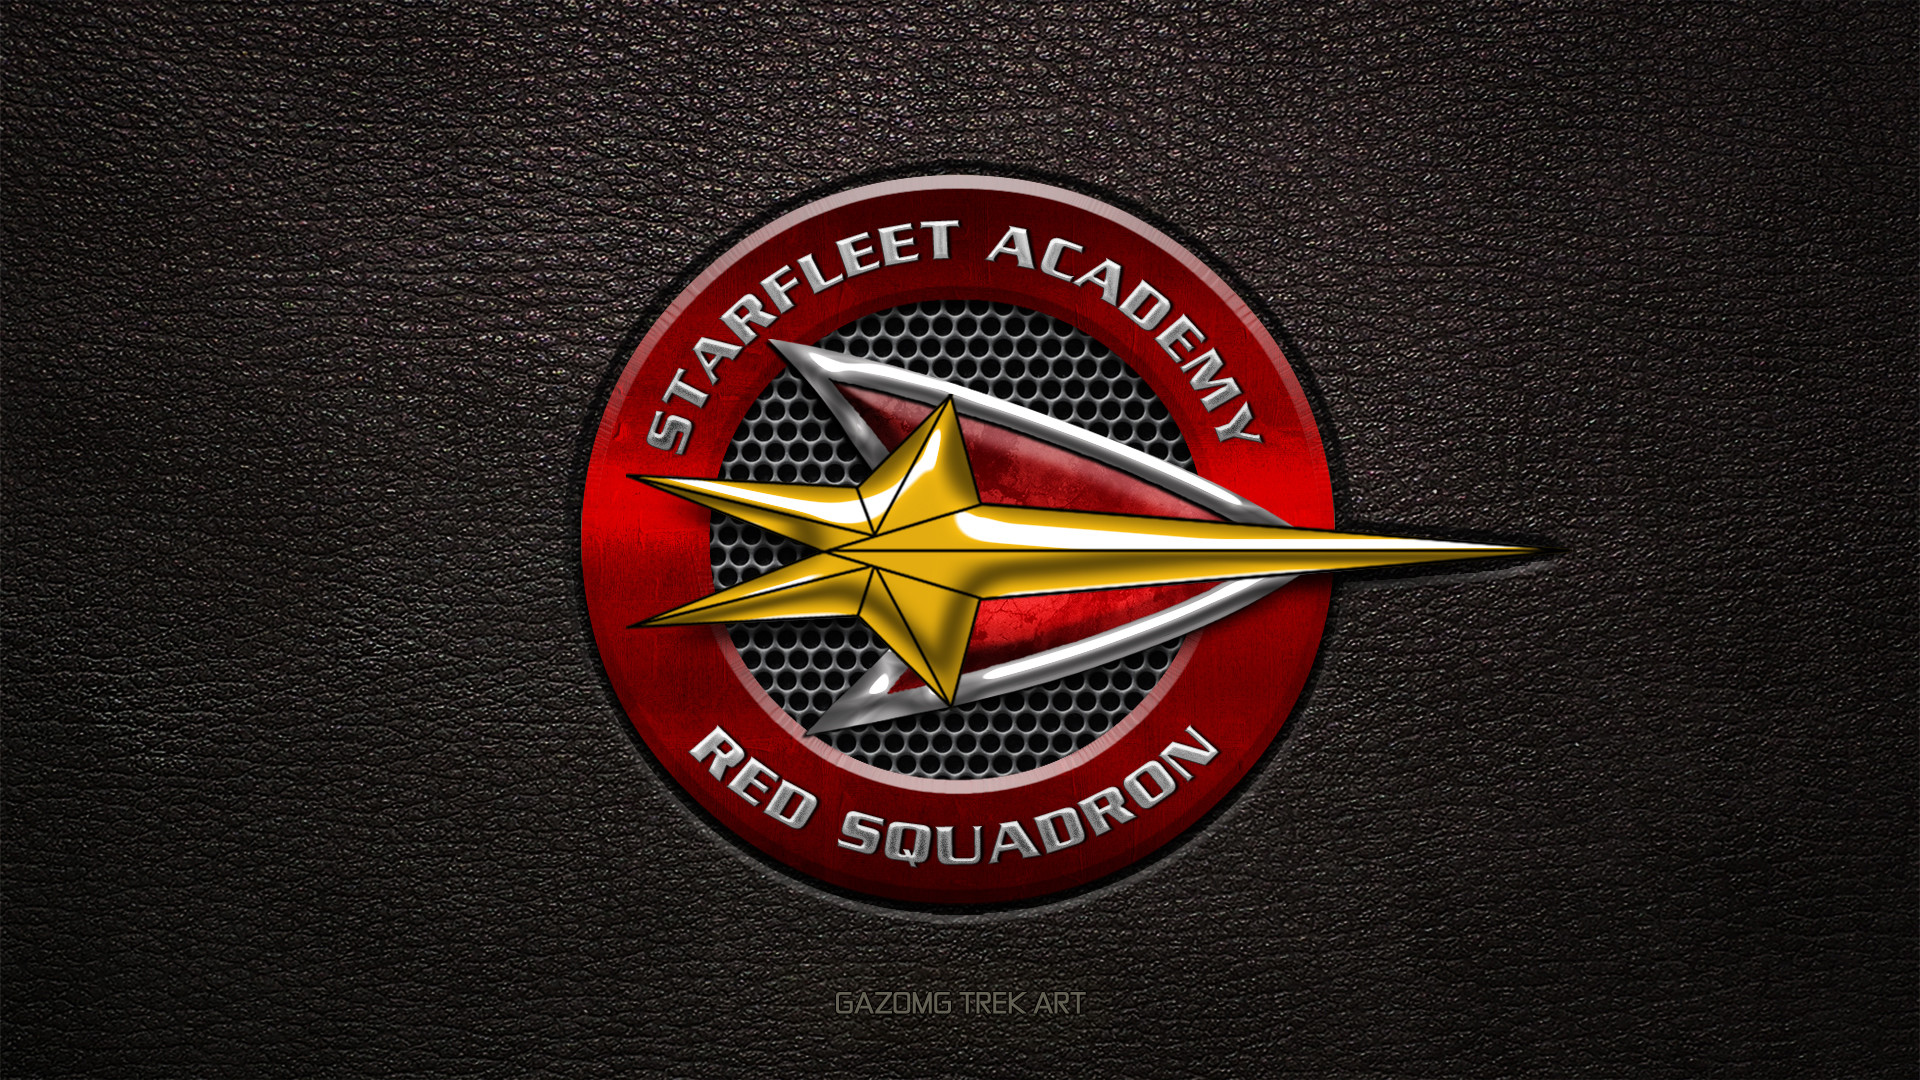 1920x1080 ... Starfleet Academy Red Squad Star Trek Logo Updated by gazomg